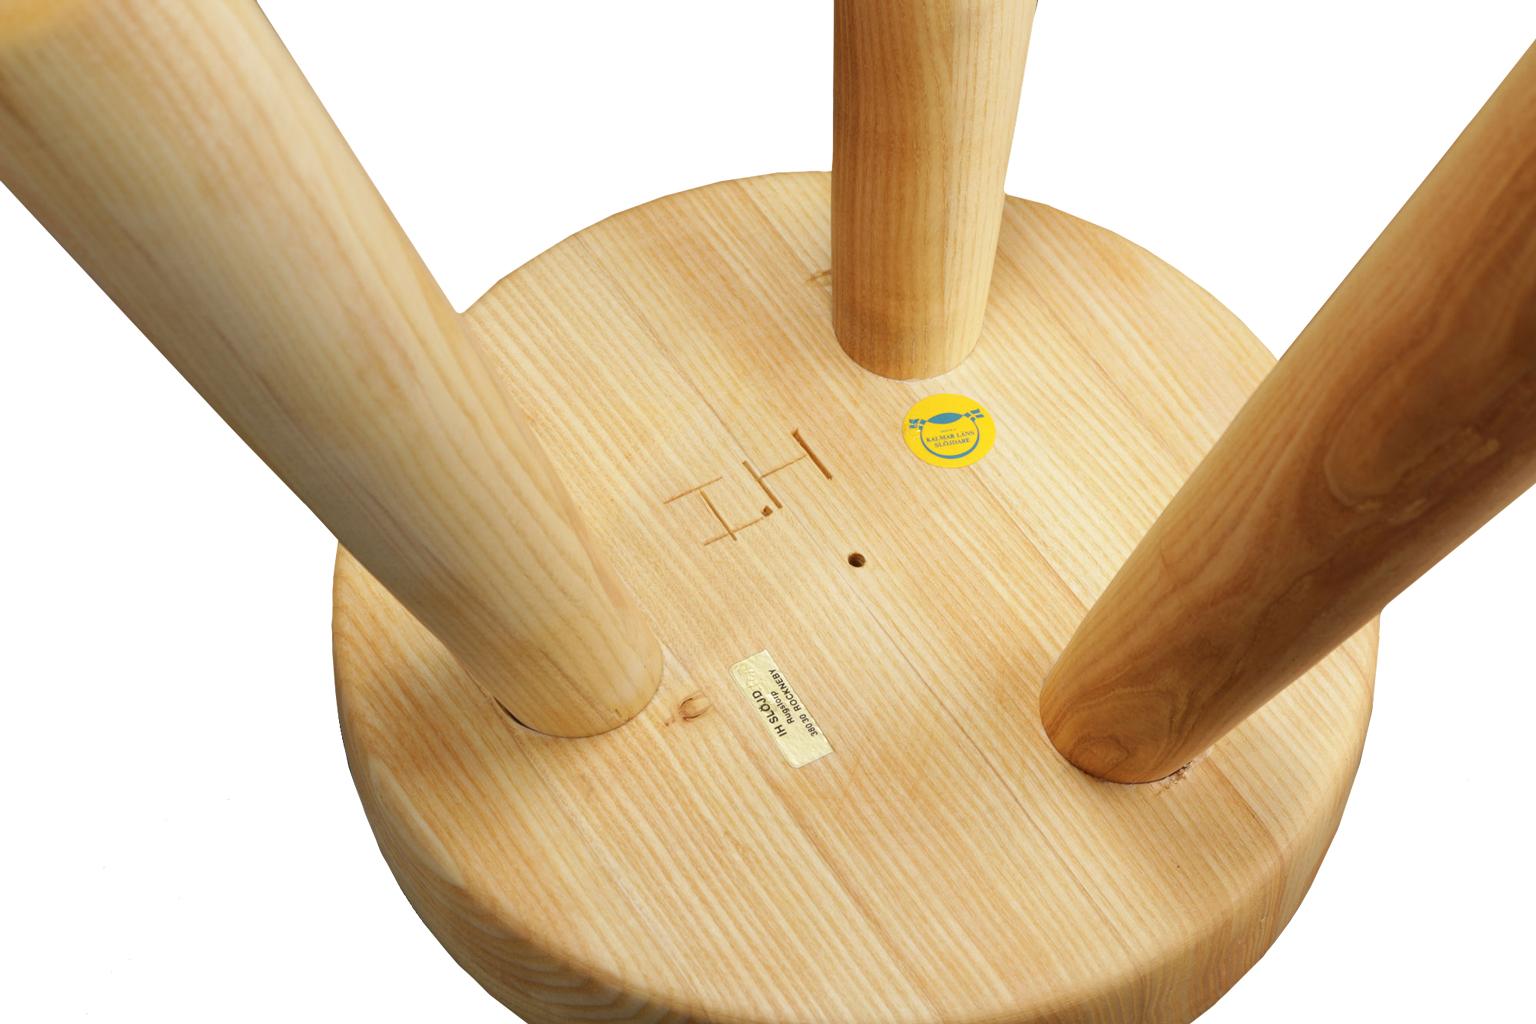 Scandinavian Modern birch stool by Ingvar Hildingsson. Signed IH and produced by Ingvar Hildingsson, Rockneby, Kalmar Län, Sweden. In mint condition.